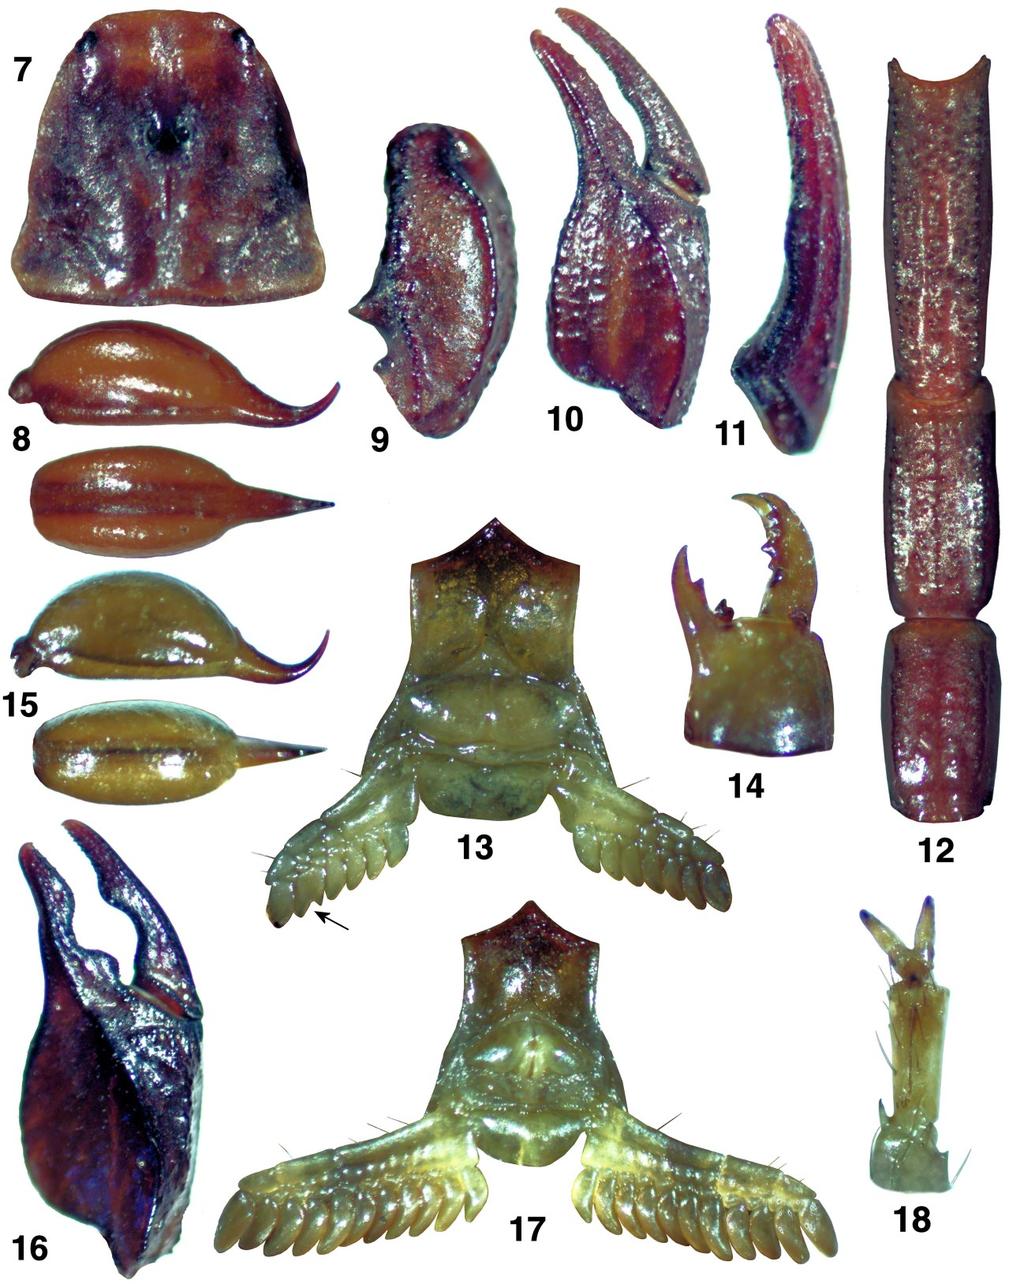 Fet et al.: Three More Species of Euscorpius Confirmed for Greece 7 Figures 7 18: Euscorpius scaber Birula, 1900, Mt. Athos, Greece. 7 14. Female paralectotype. 15 18. Male lectotype. 7. Carapace. 8.